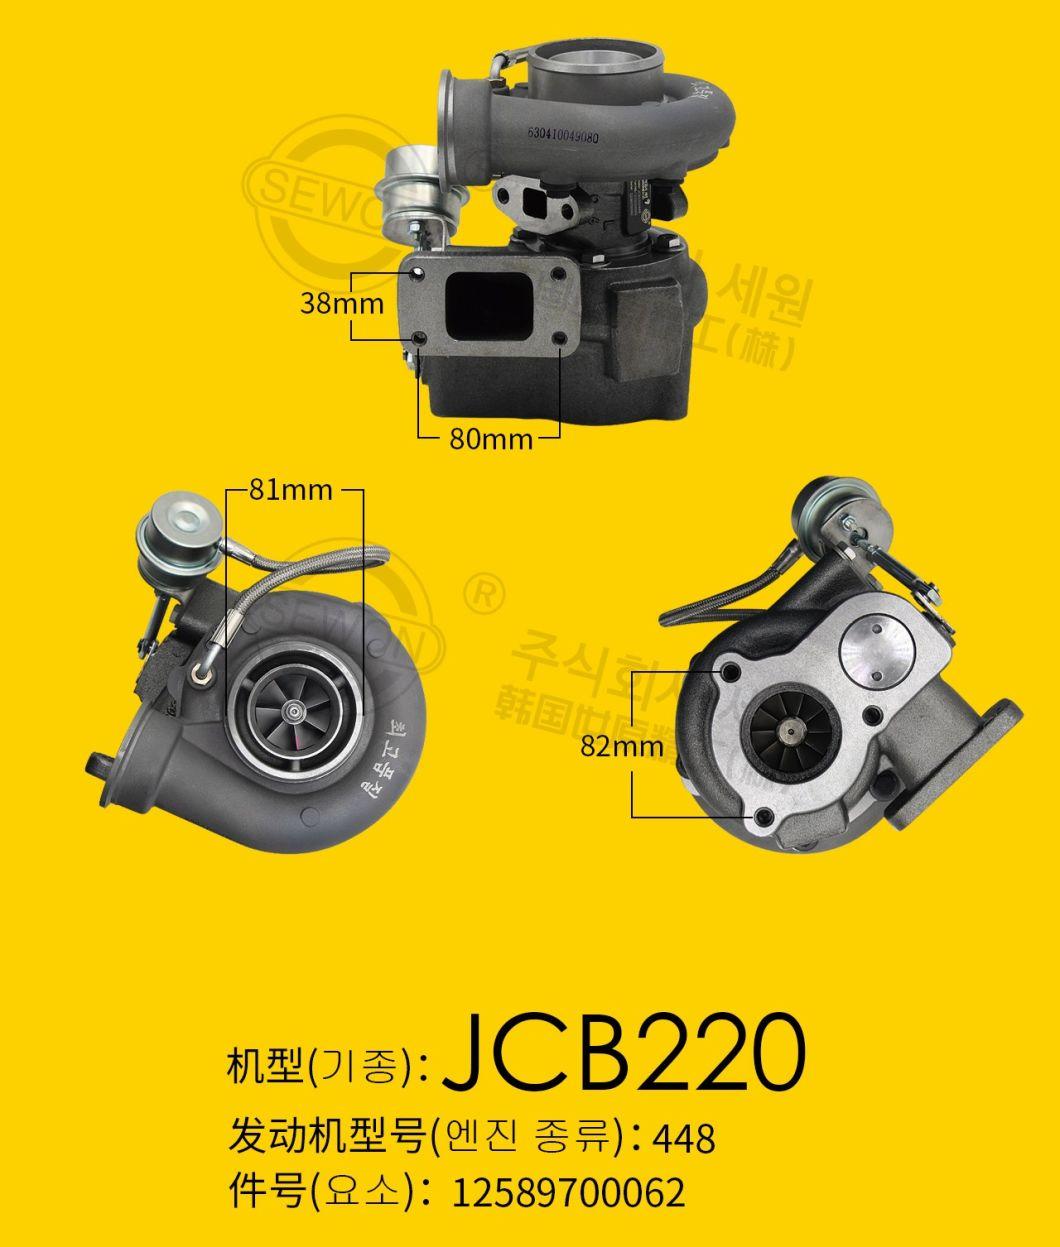 Turbocharger Engine 448 Turbocharger 12589700062 for Jcb220